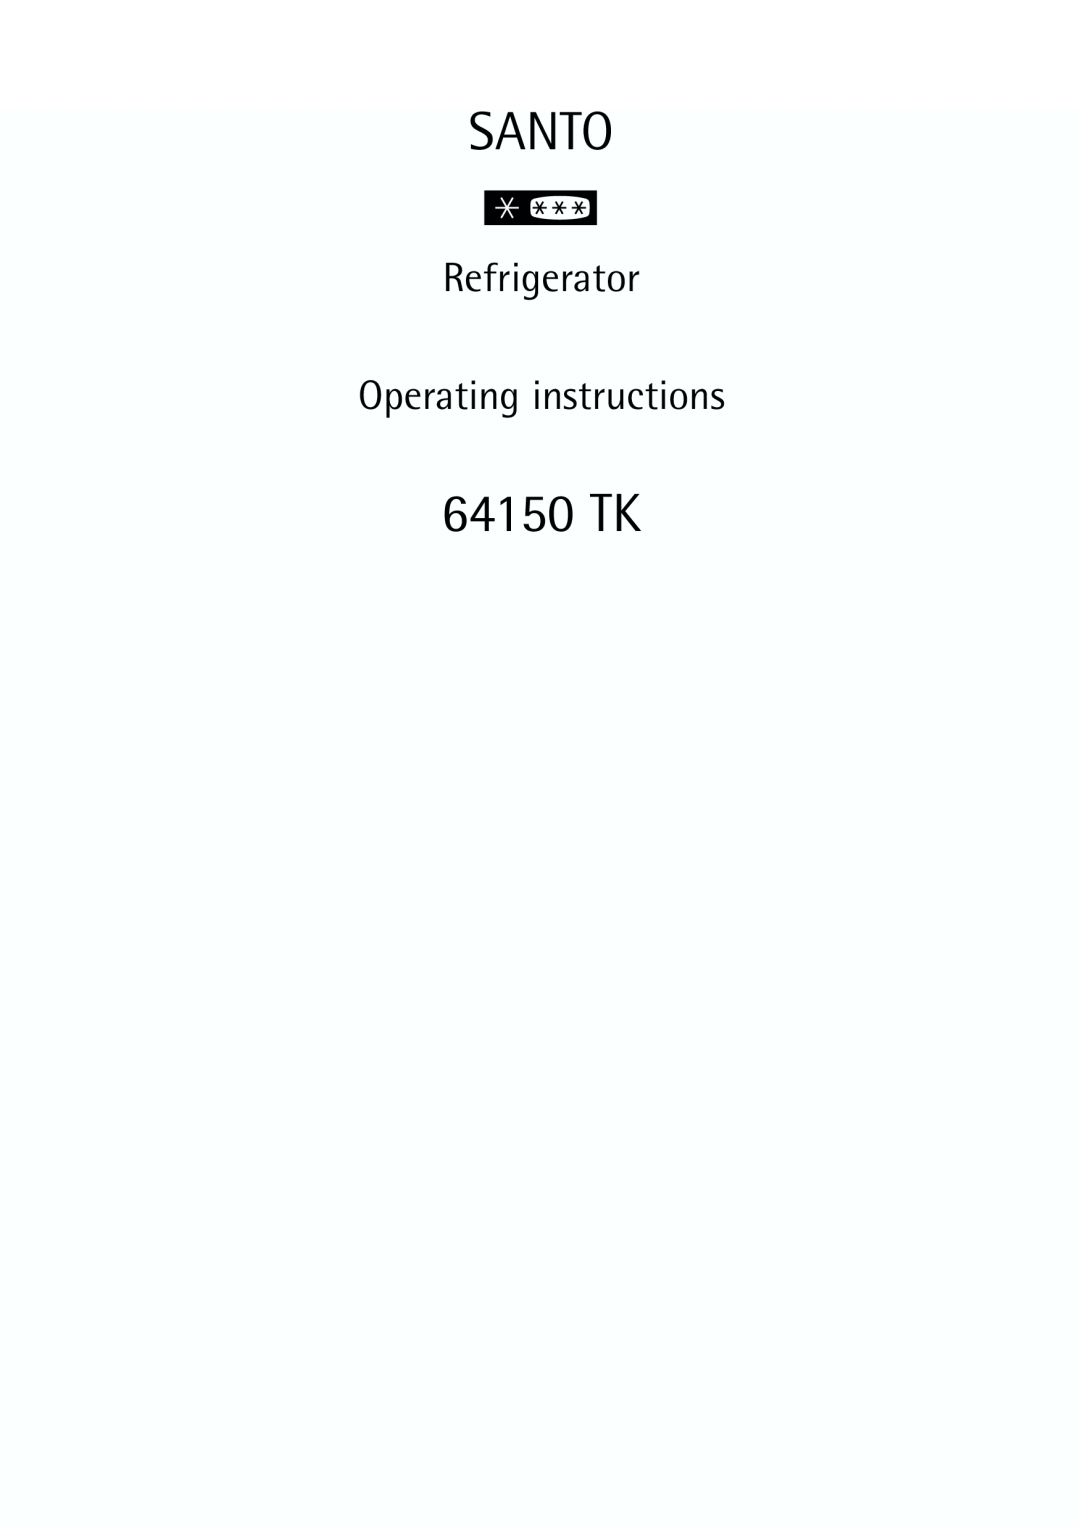 Electrolux 64150 TK manual Santo, Refrigerator Operating instructions 